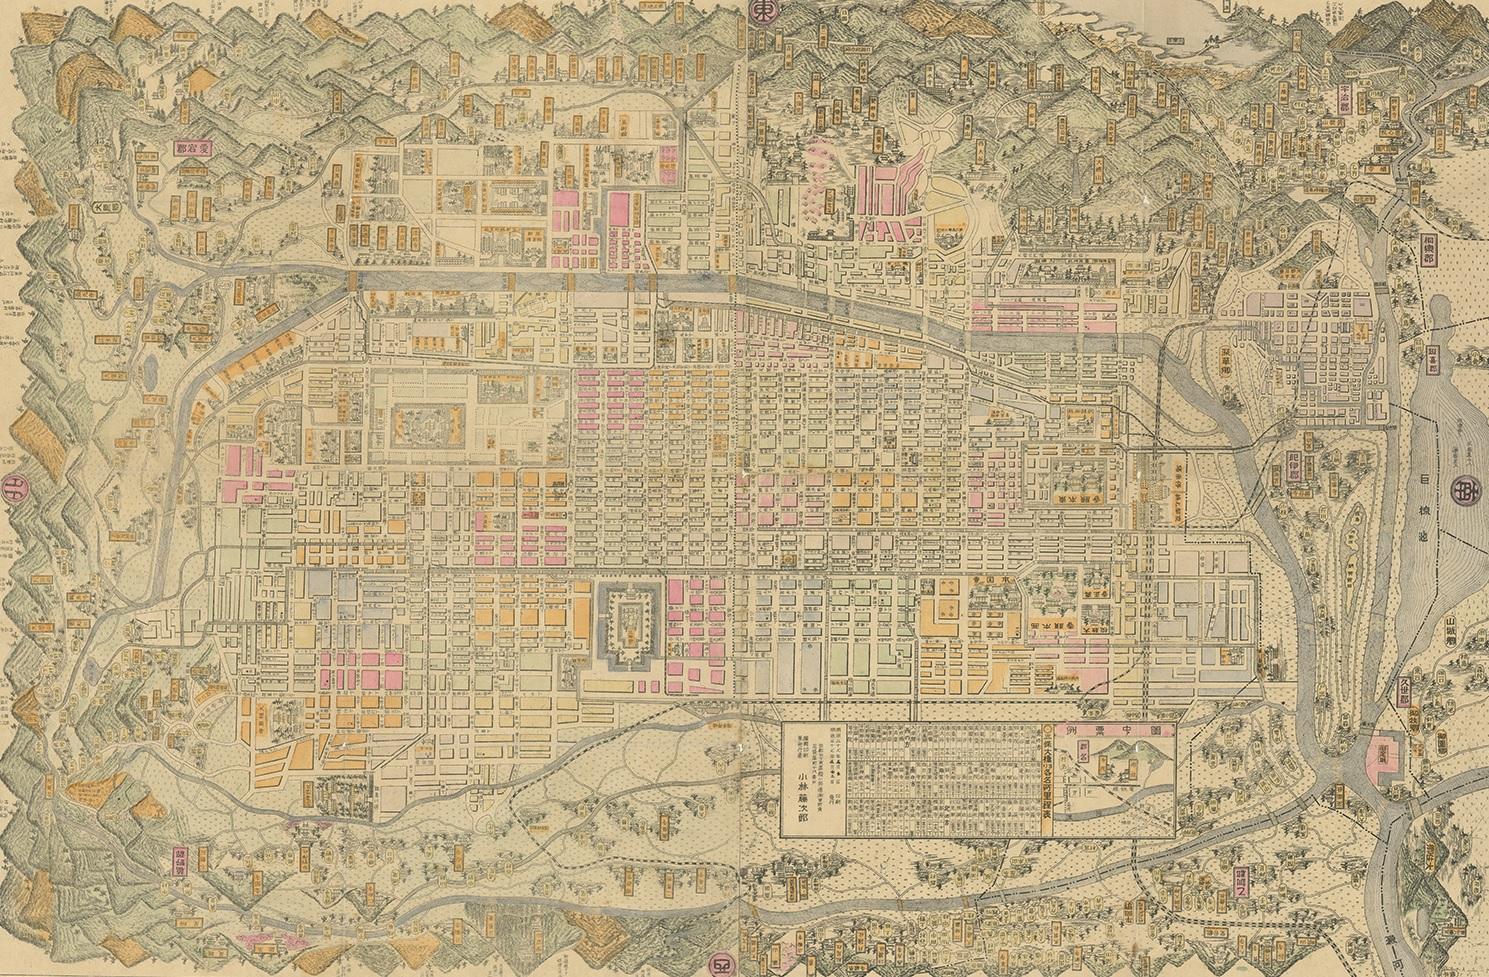 Old map of Kyoto, Japan. Published by Kobayashi, 1905.